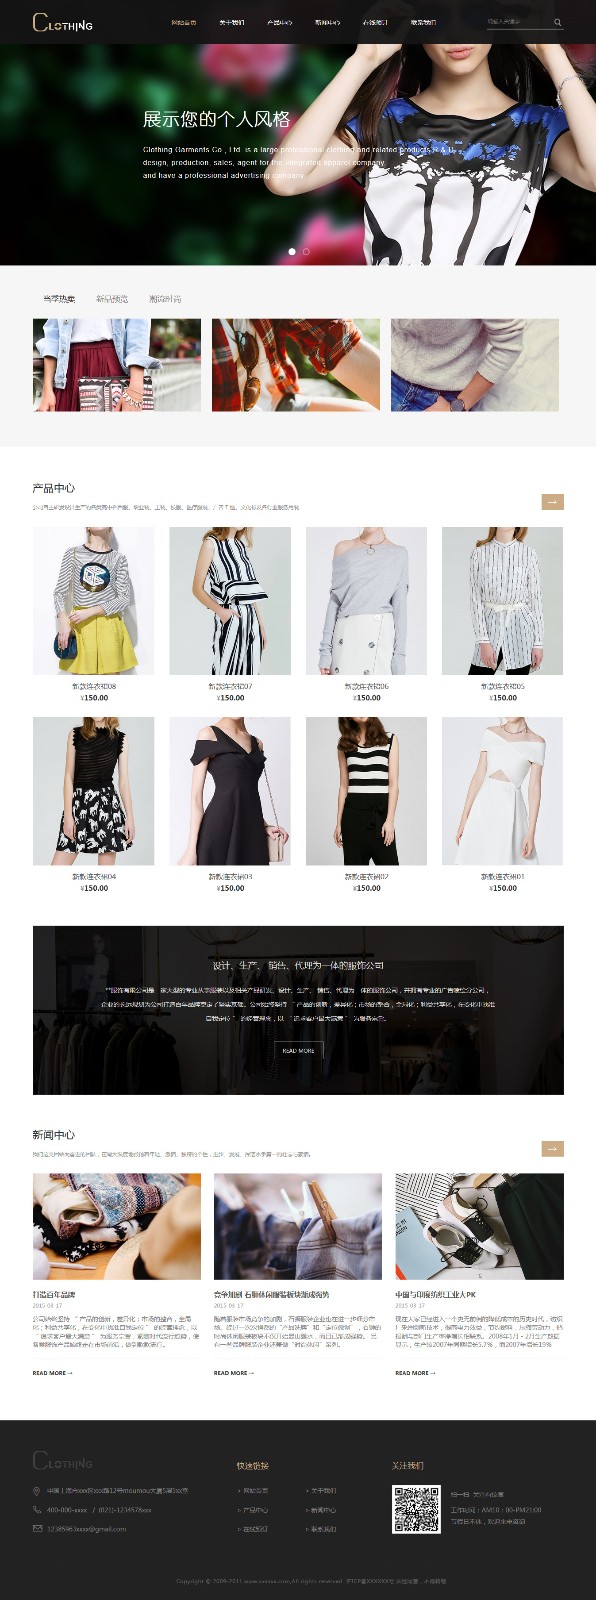 服装网站模板-clothing-1258729